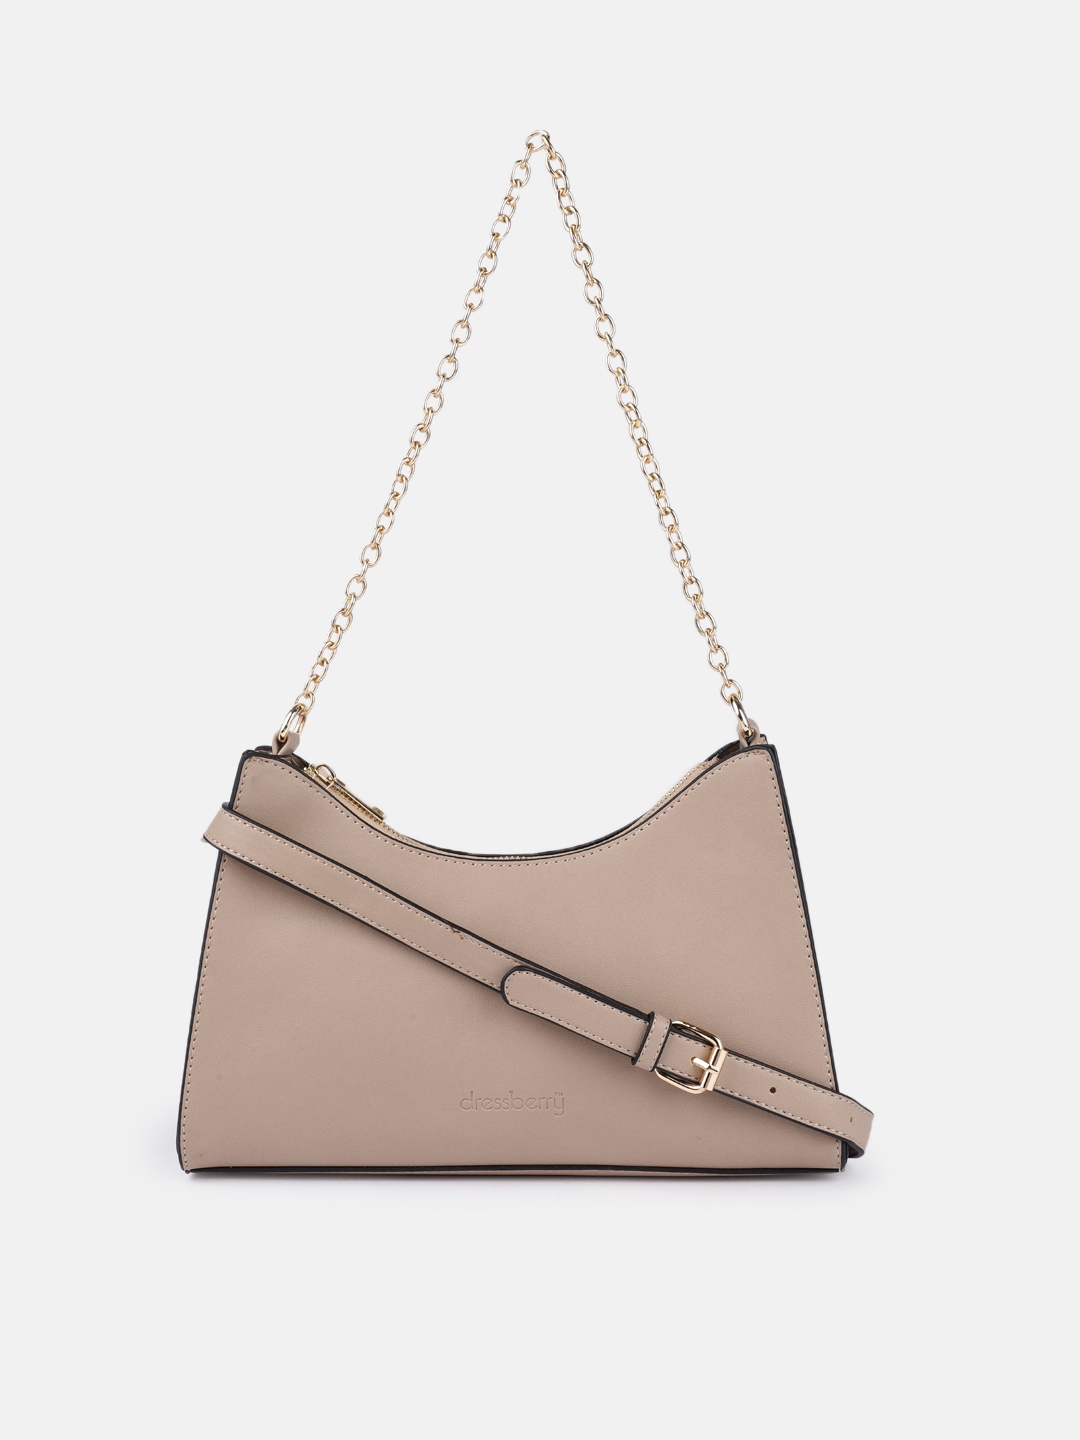 Buy DressBerry Beige Structured Hobo Bag - Handbags for Women 15322886 ...